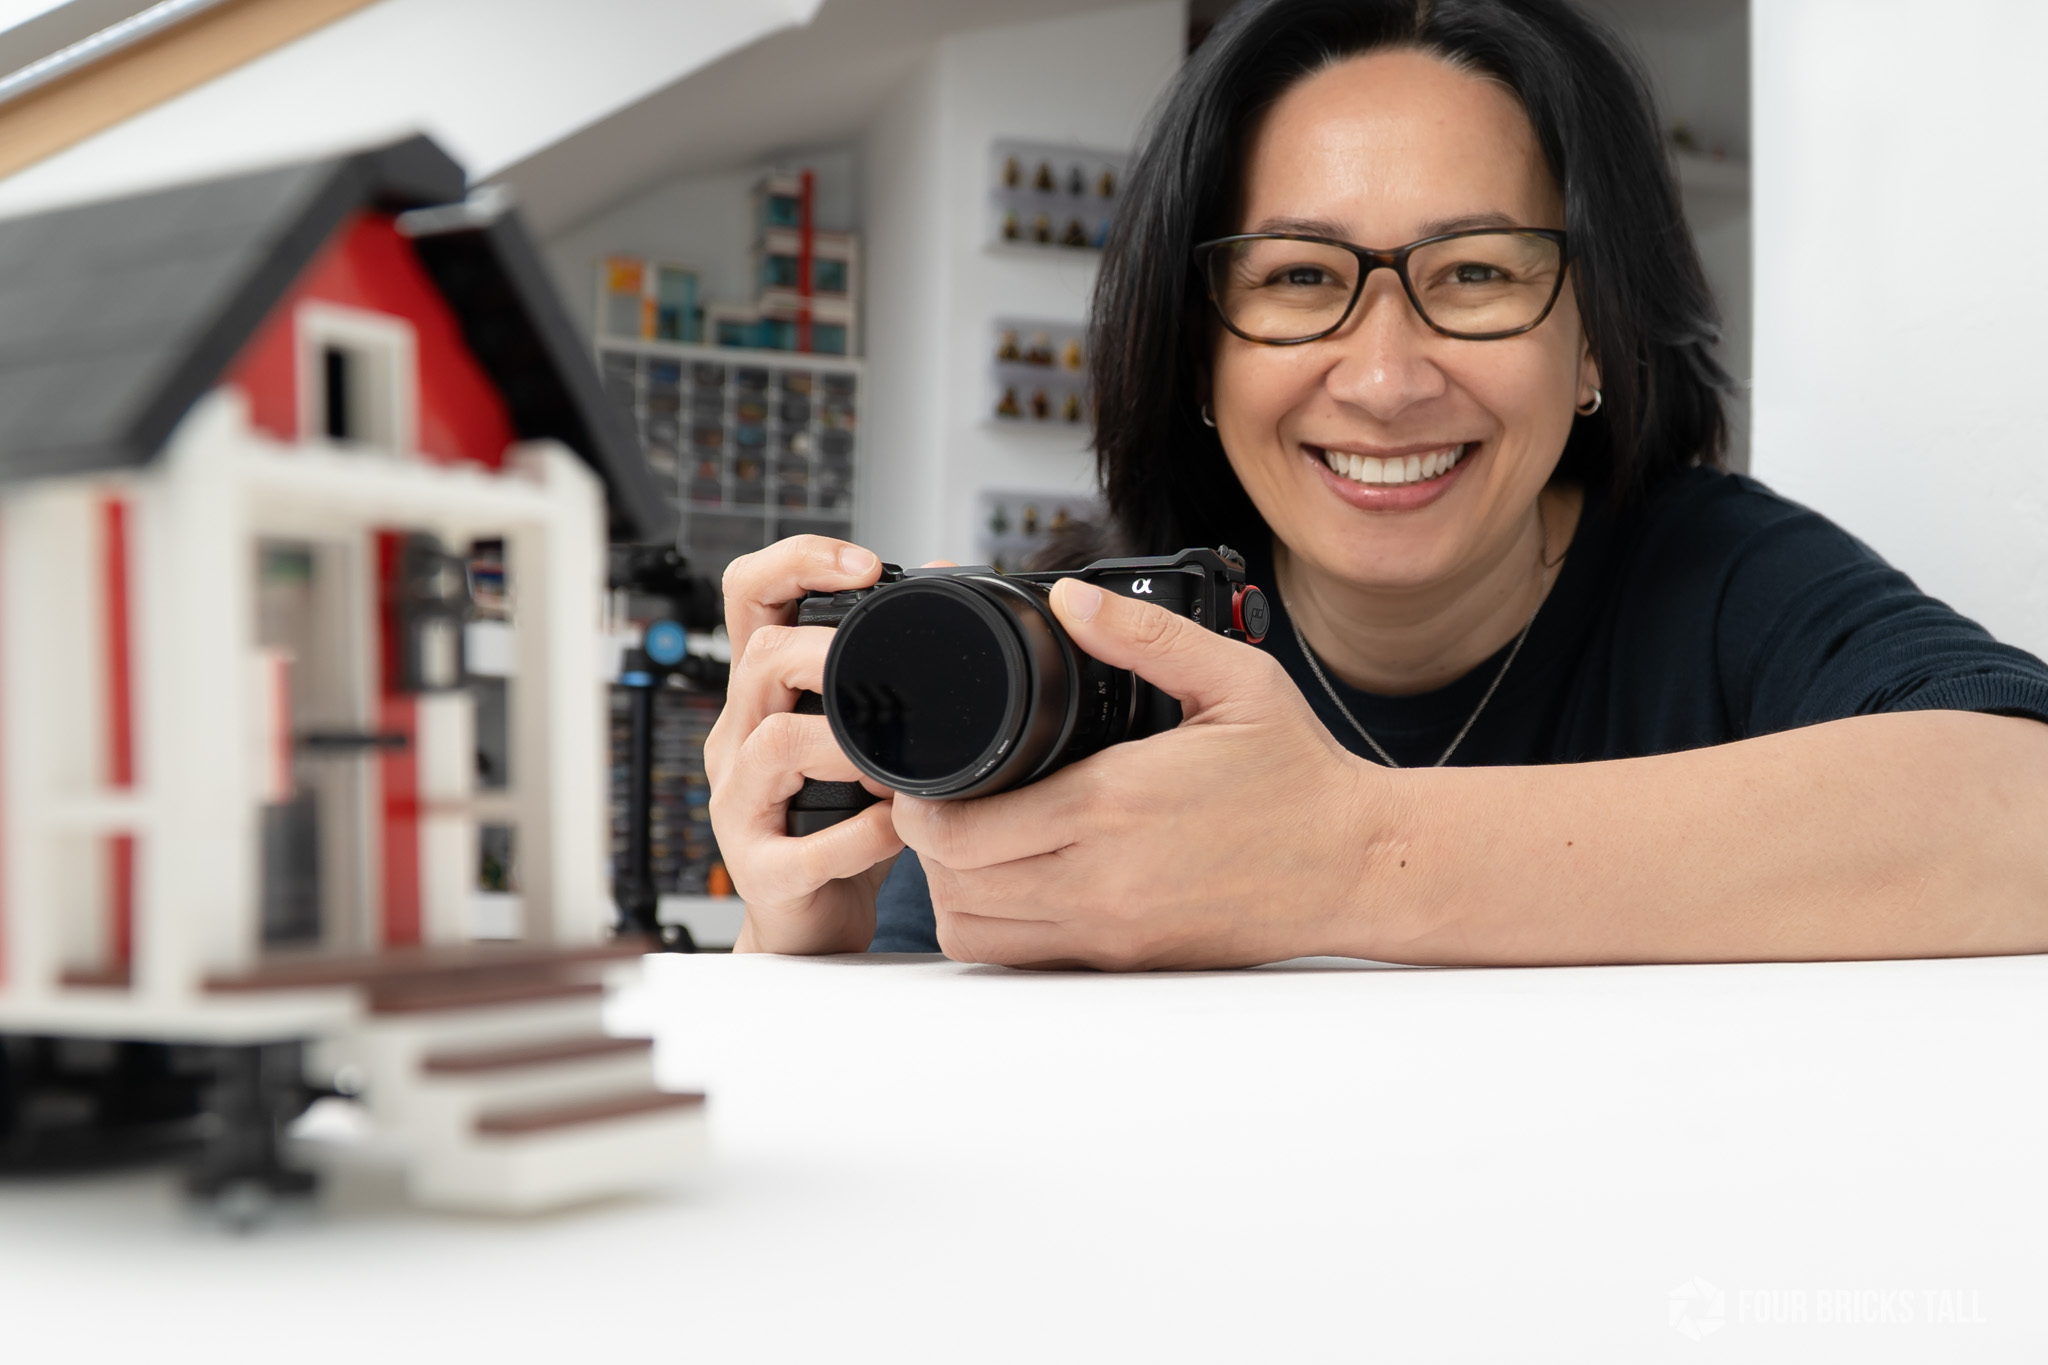 Photo of LEGO photographer Anna Bitanga known as Four Bricks Tall holding a Sony camera